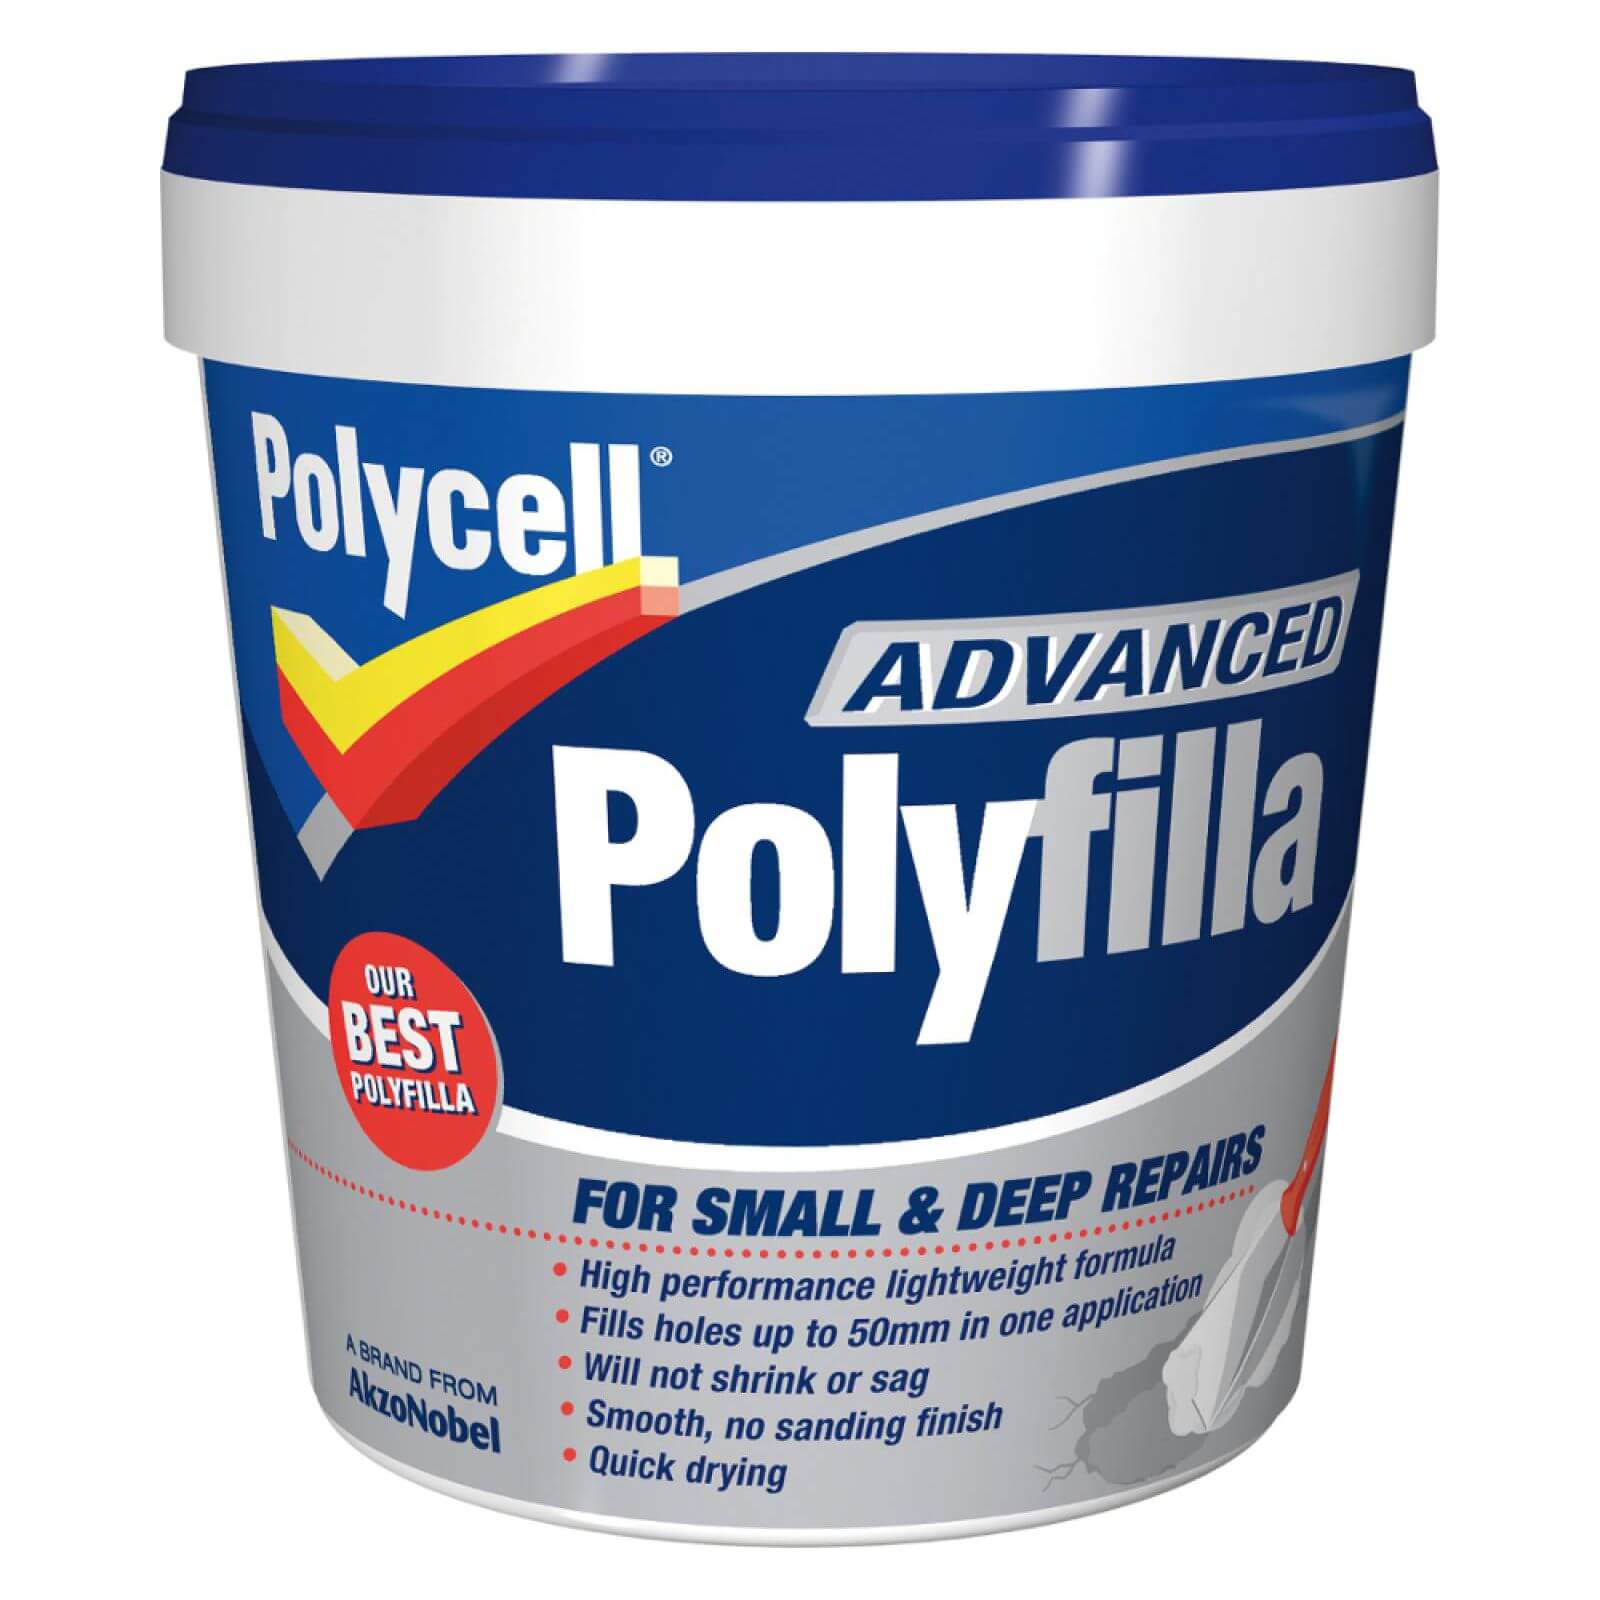 Photo of Polycell Advanced Polyfilla - 600ml